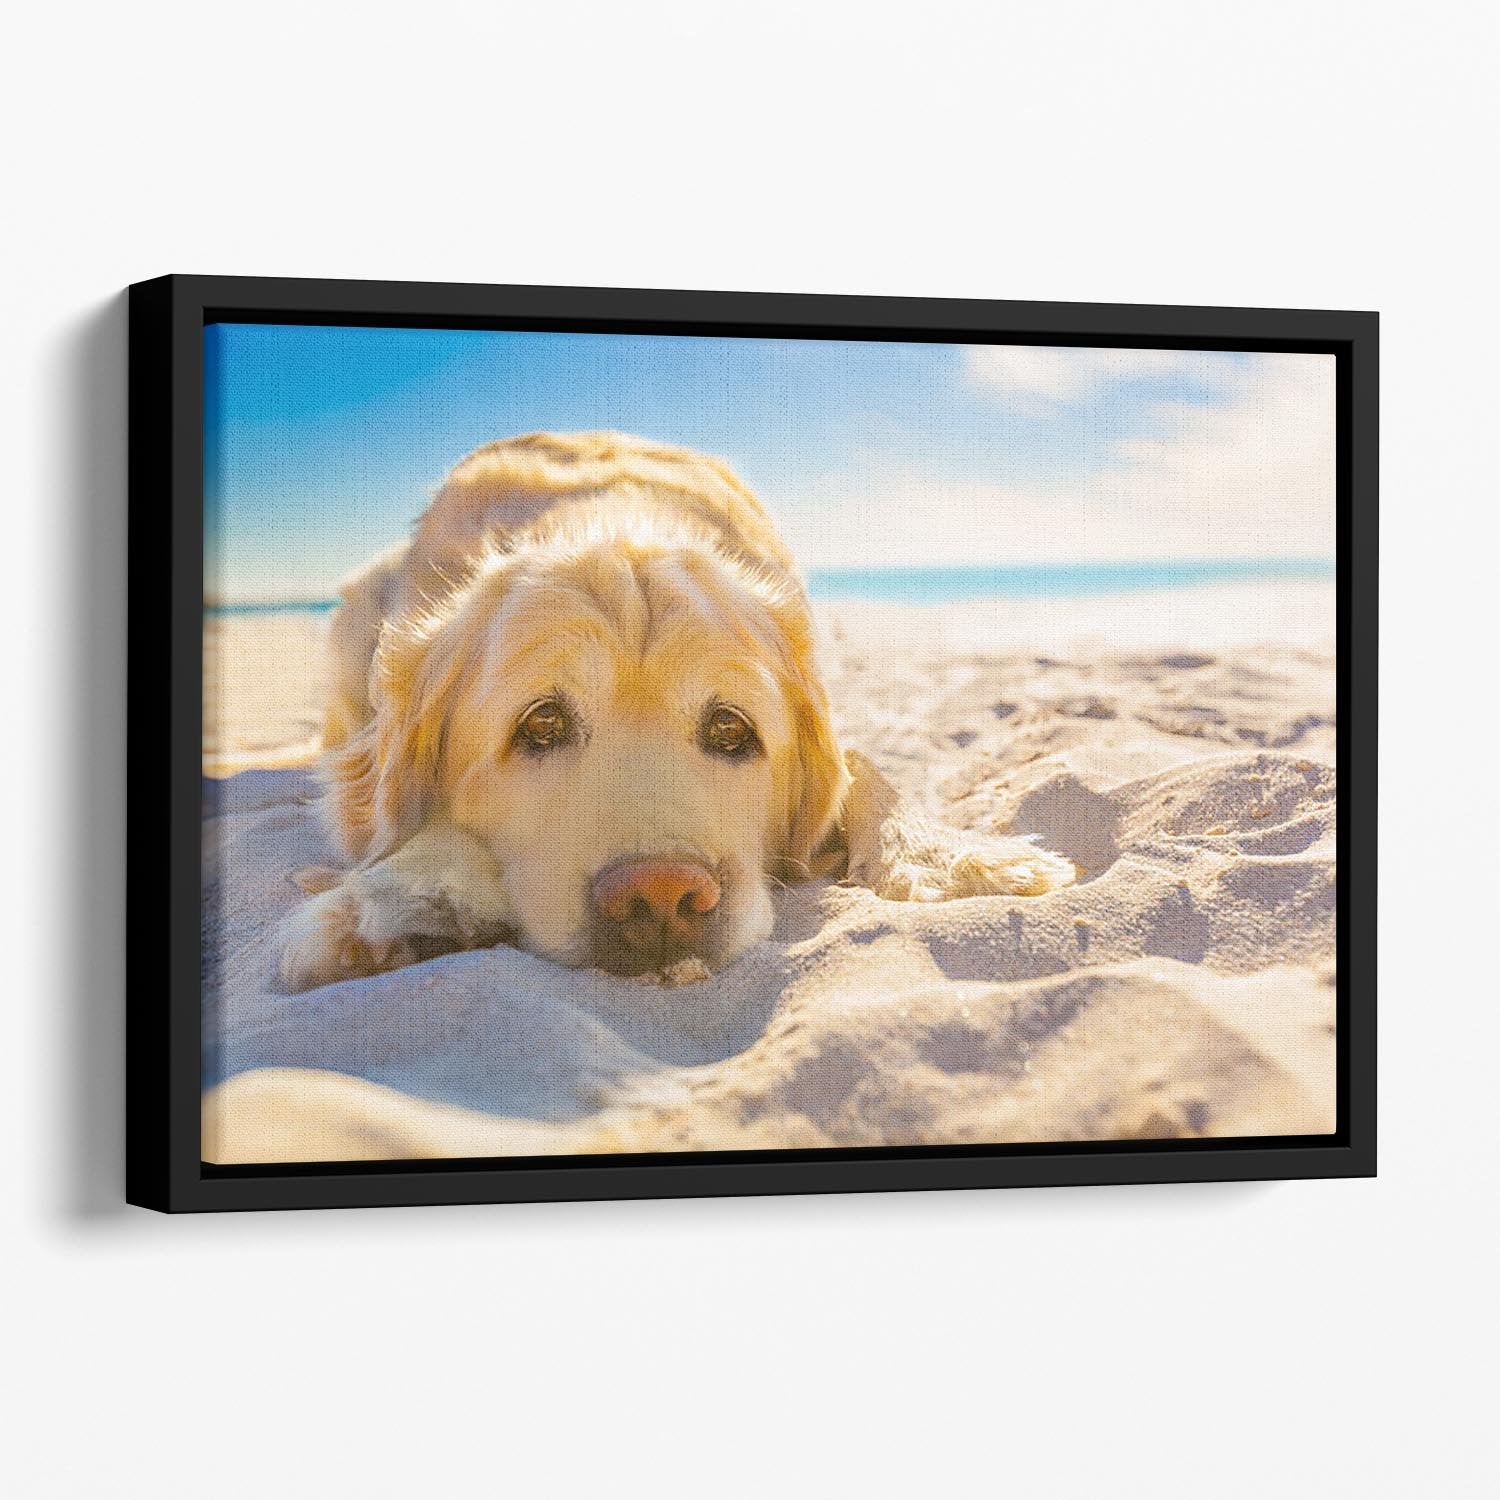 Golden retriever dog relaxing resting Floating Framed Canvas - Canvas Art Rocks - 1